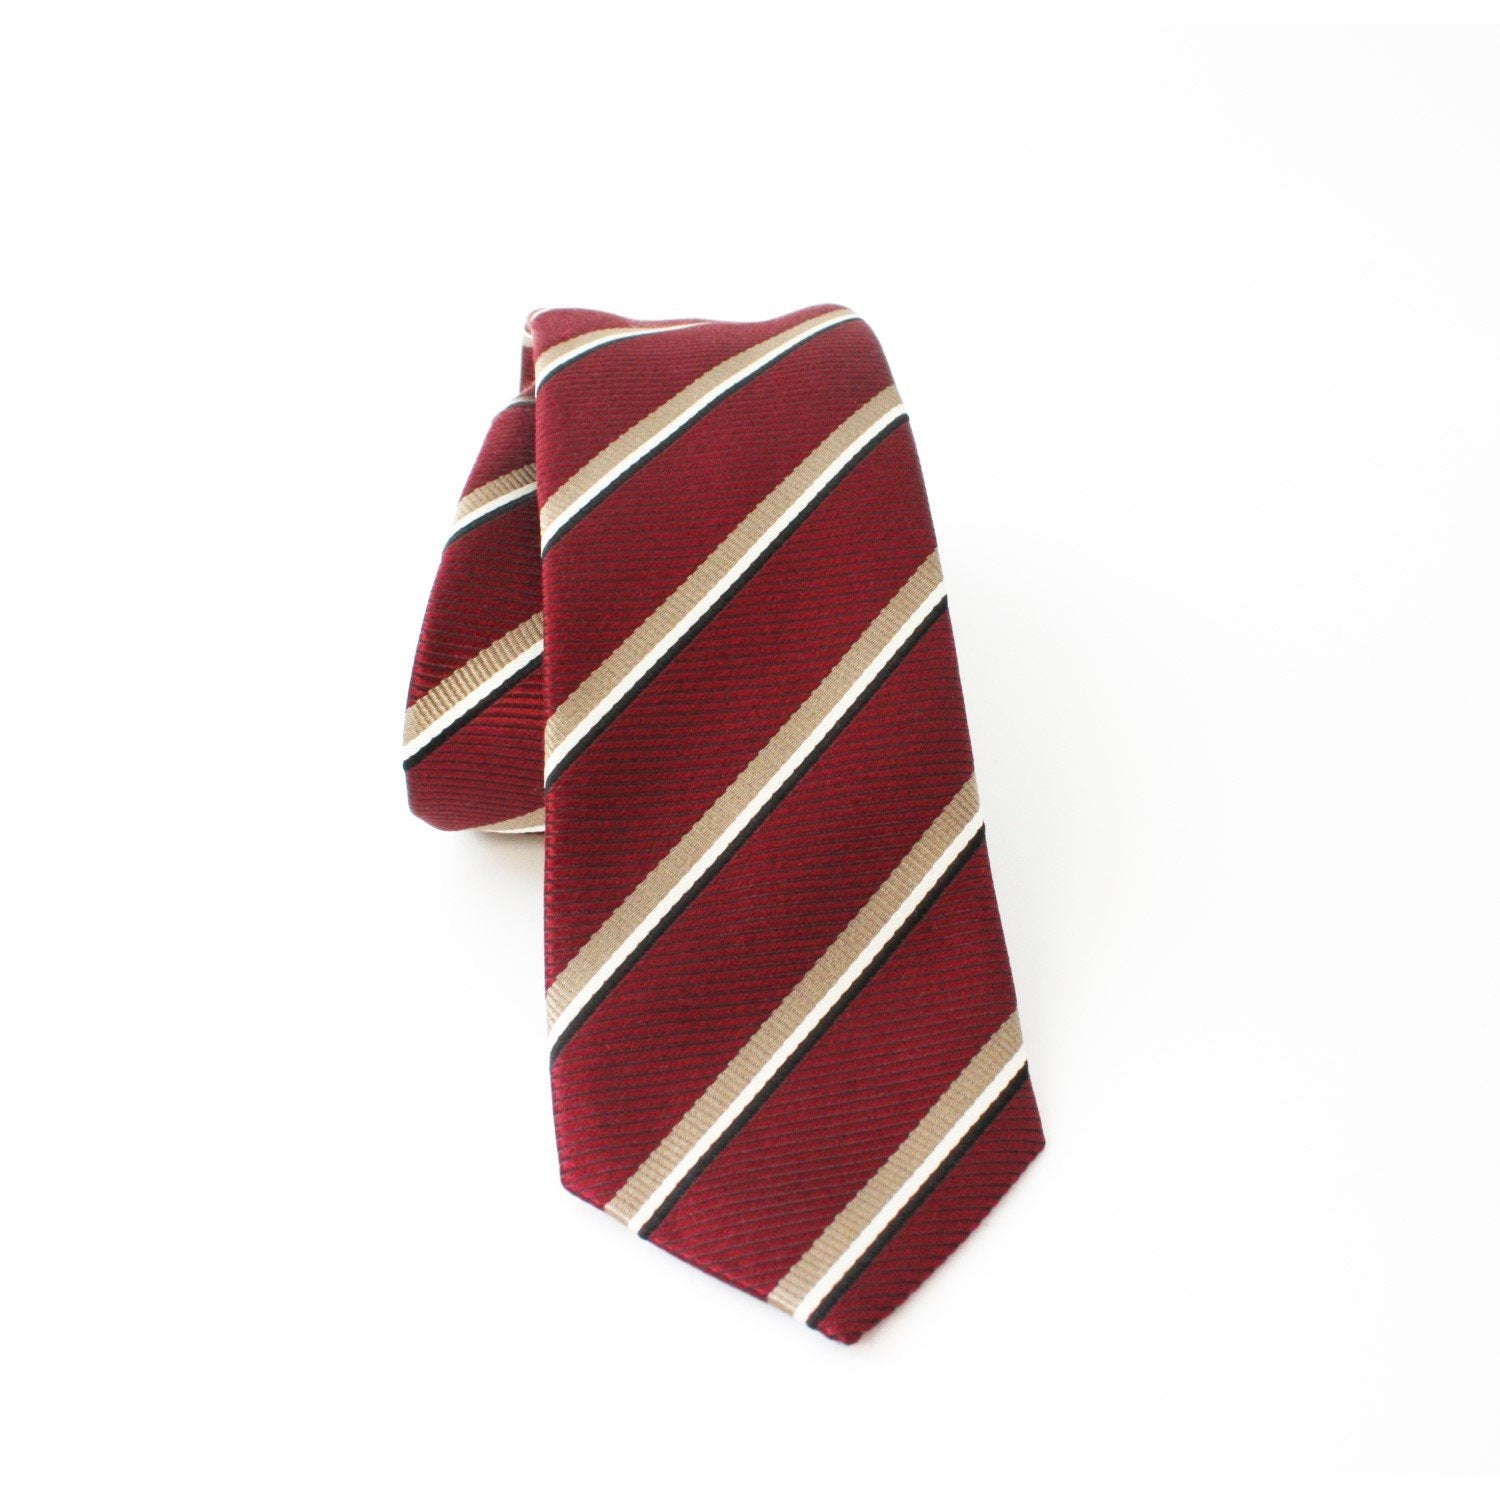 Prada Mens Silk Tie Bordeaux Red Striped Pattern